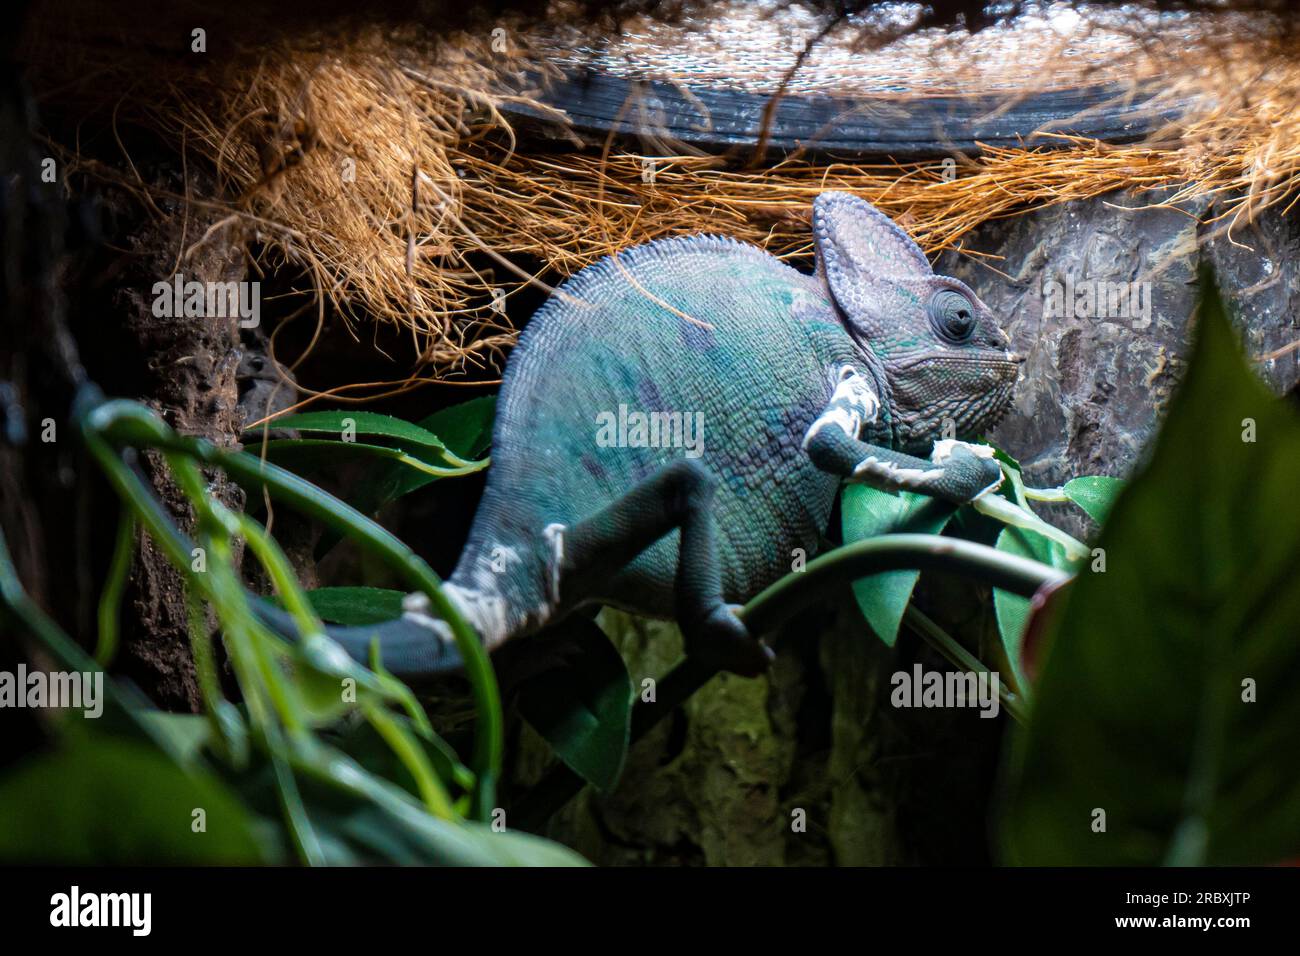 Chameleon under artificial light background. Stock Photo